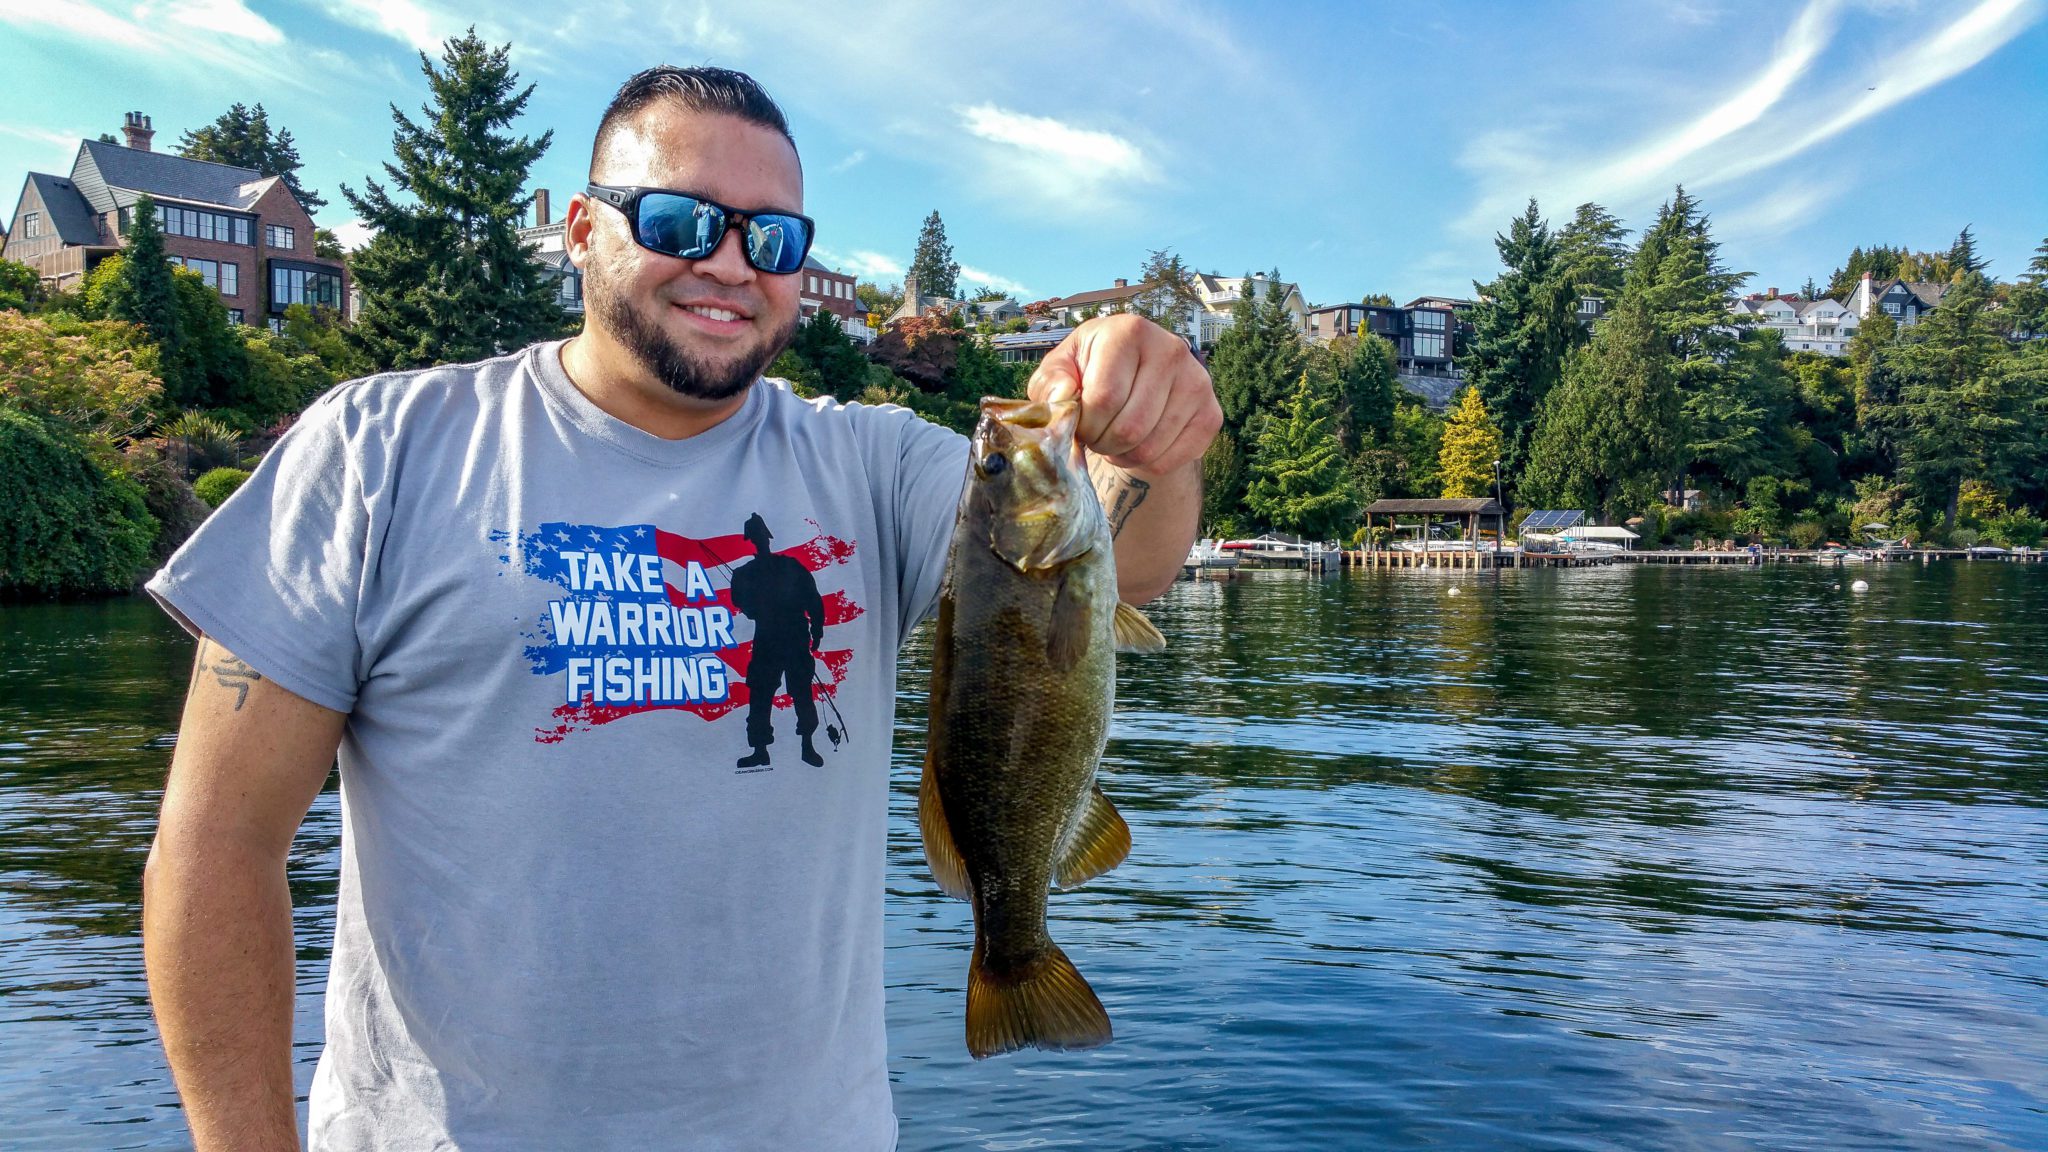 Take a Warrior Fishing – Lake Washington Presented by Pacific Seafood